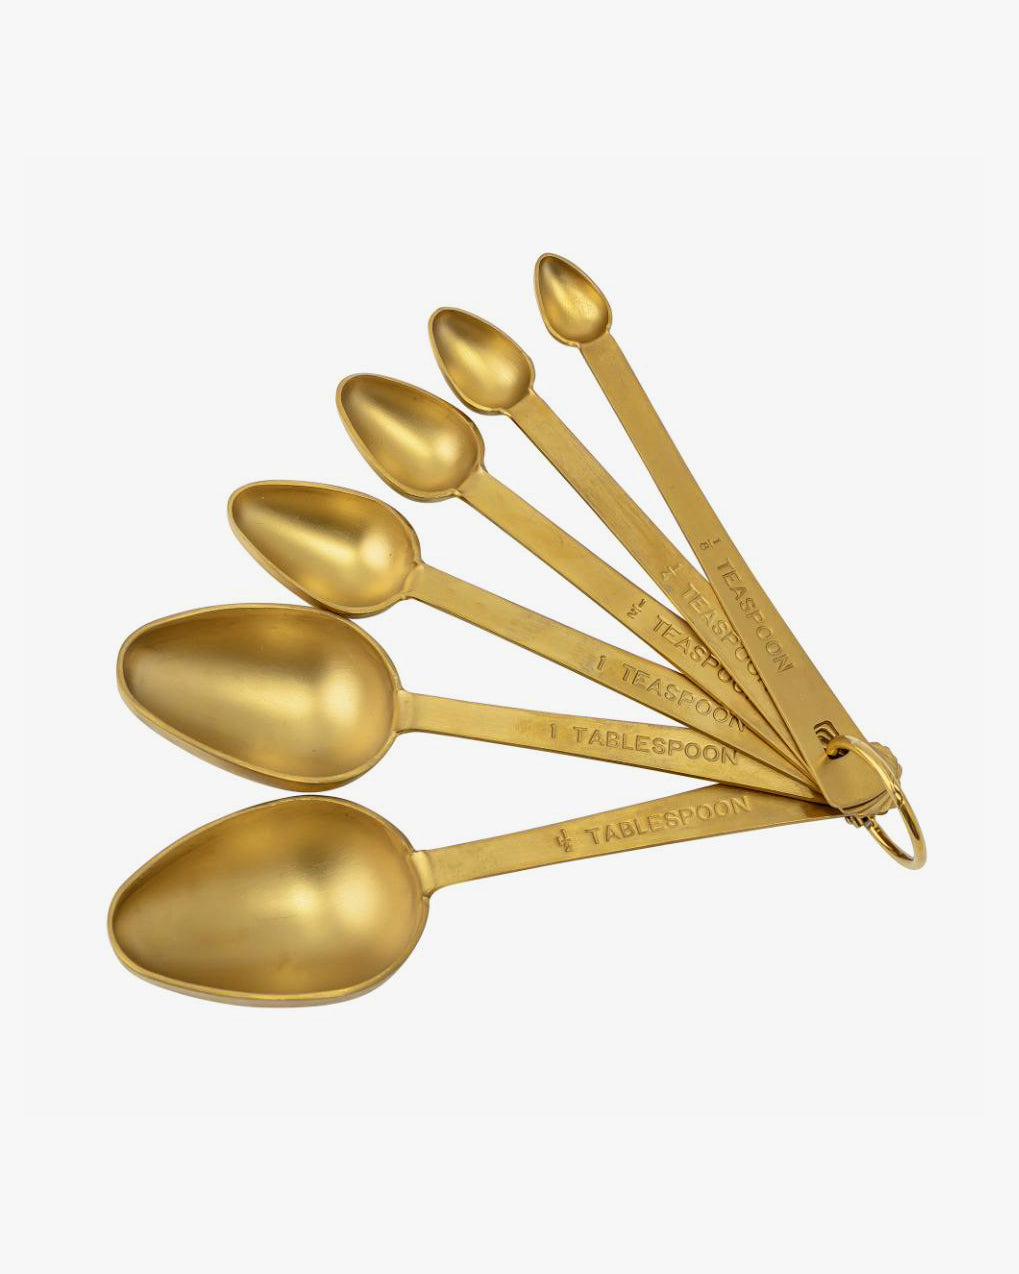 Gold Measuring Spoons - 6 Set